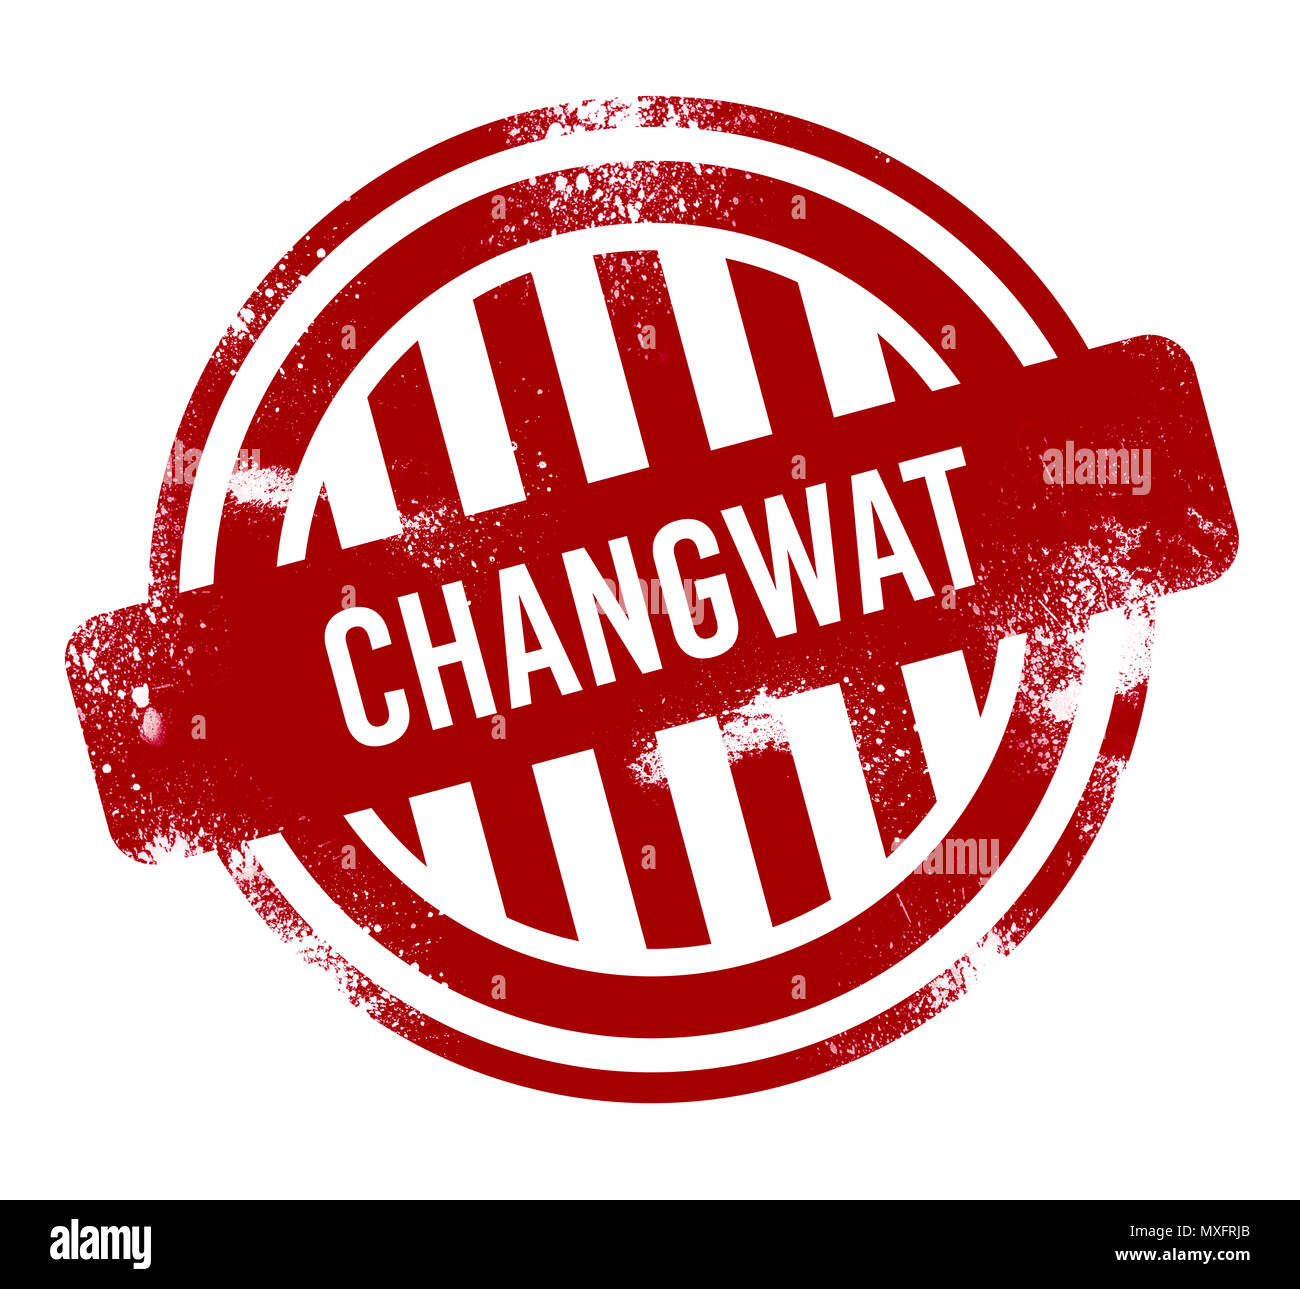 Changwat Nakhon Sawan - Red grunge button, stamp Stock Photo